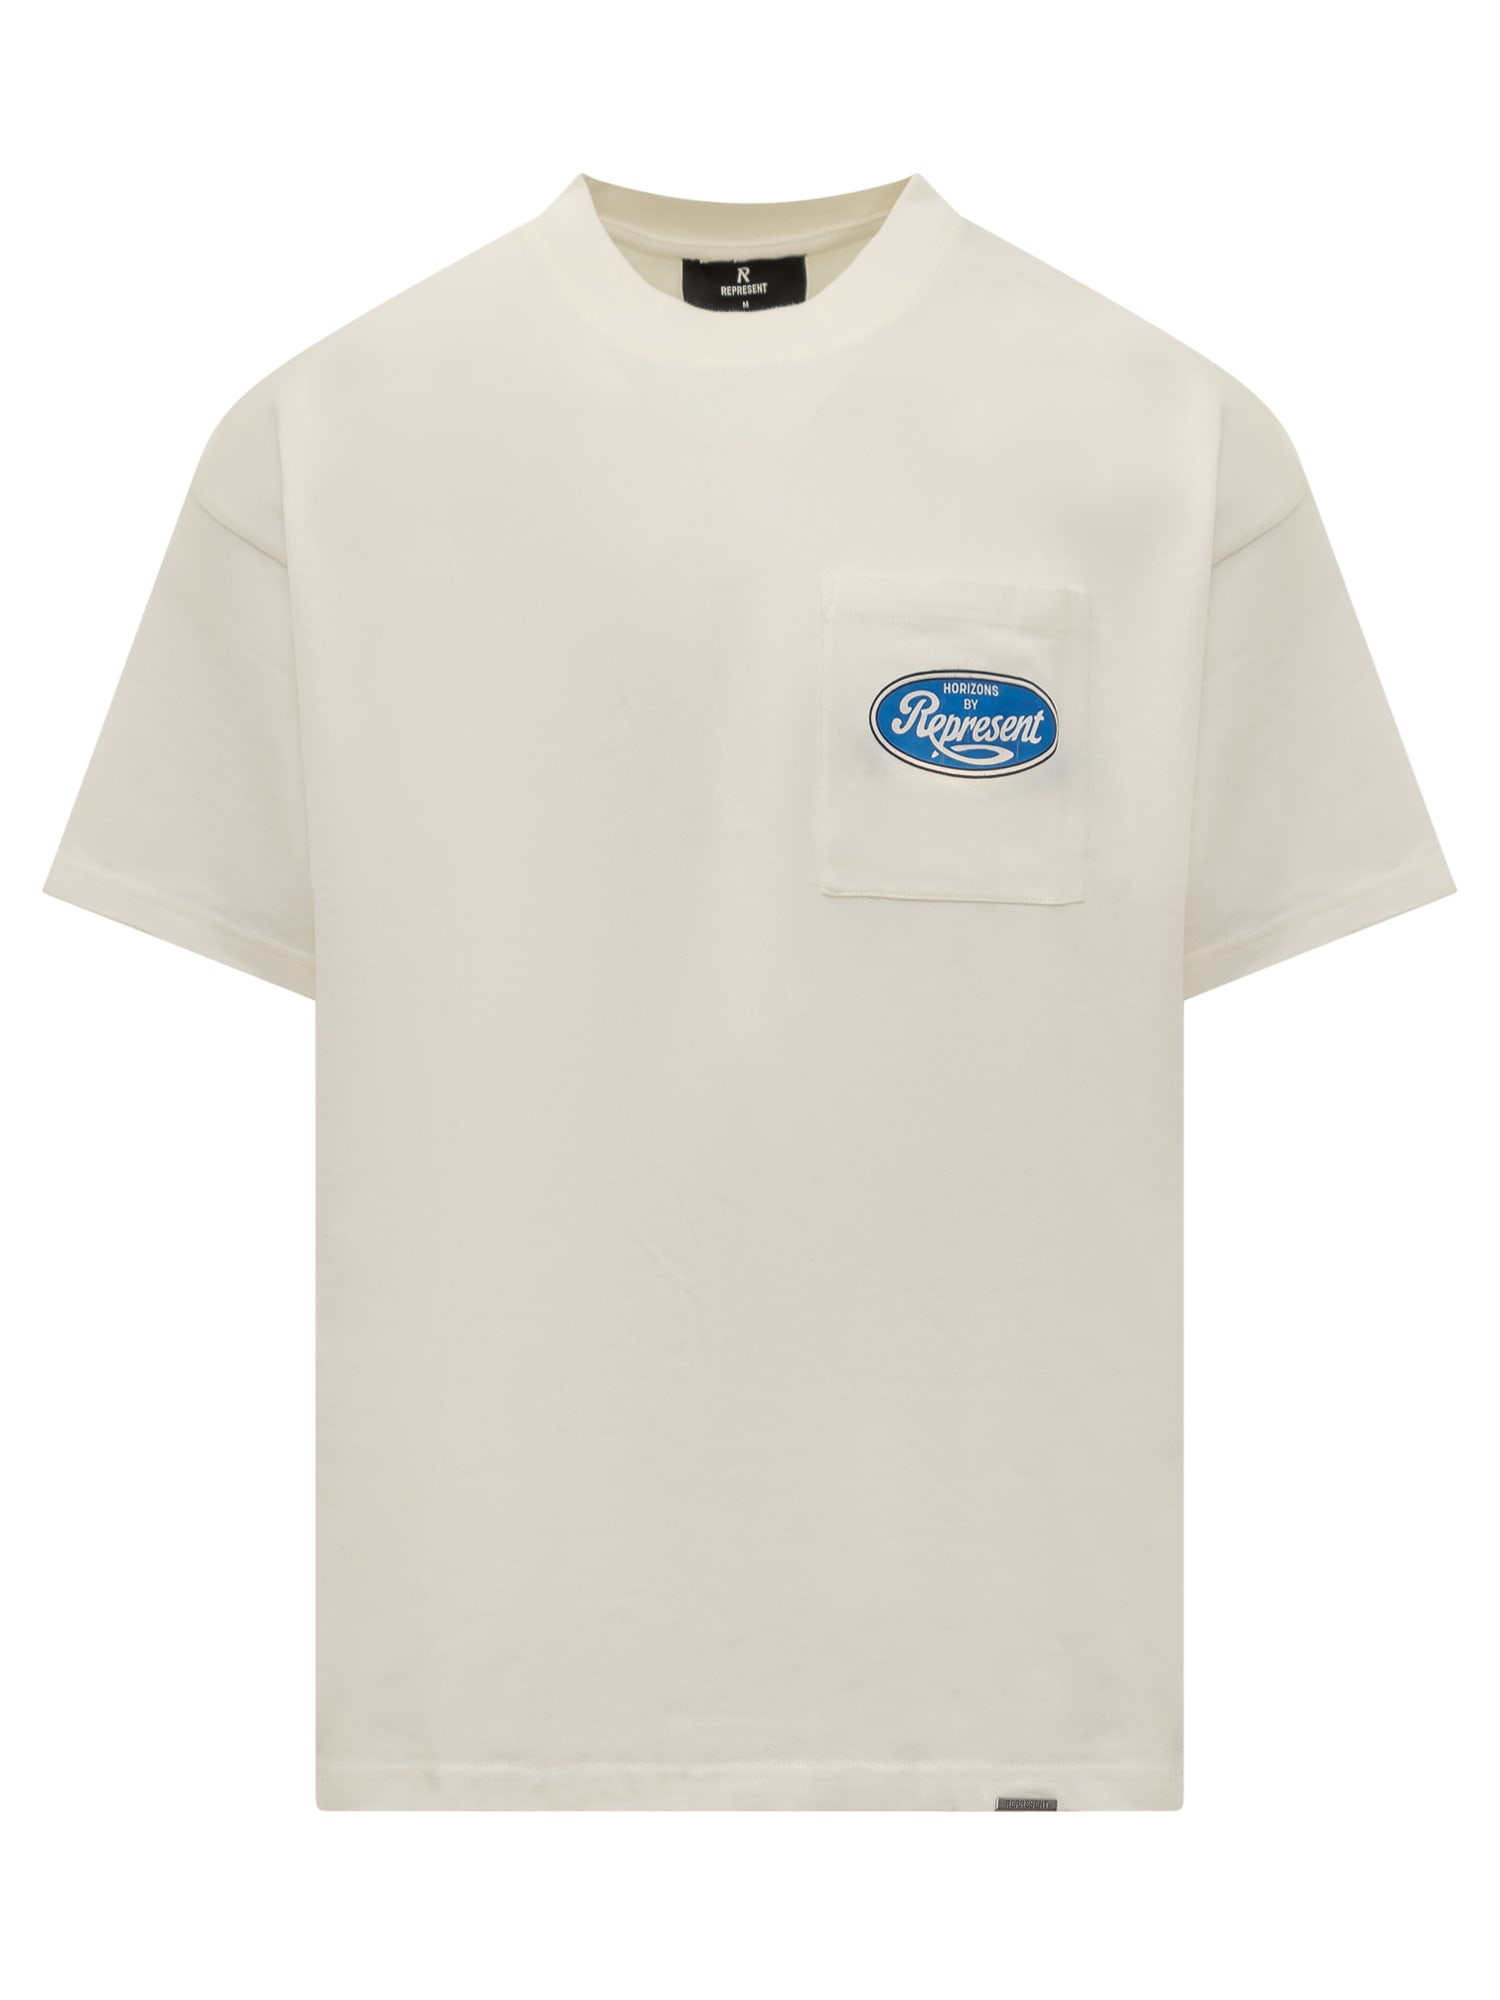 Represent T-shirt In Flat White